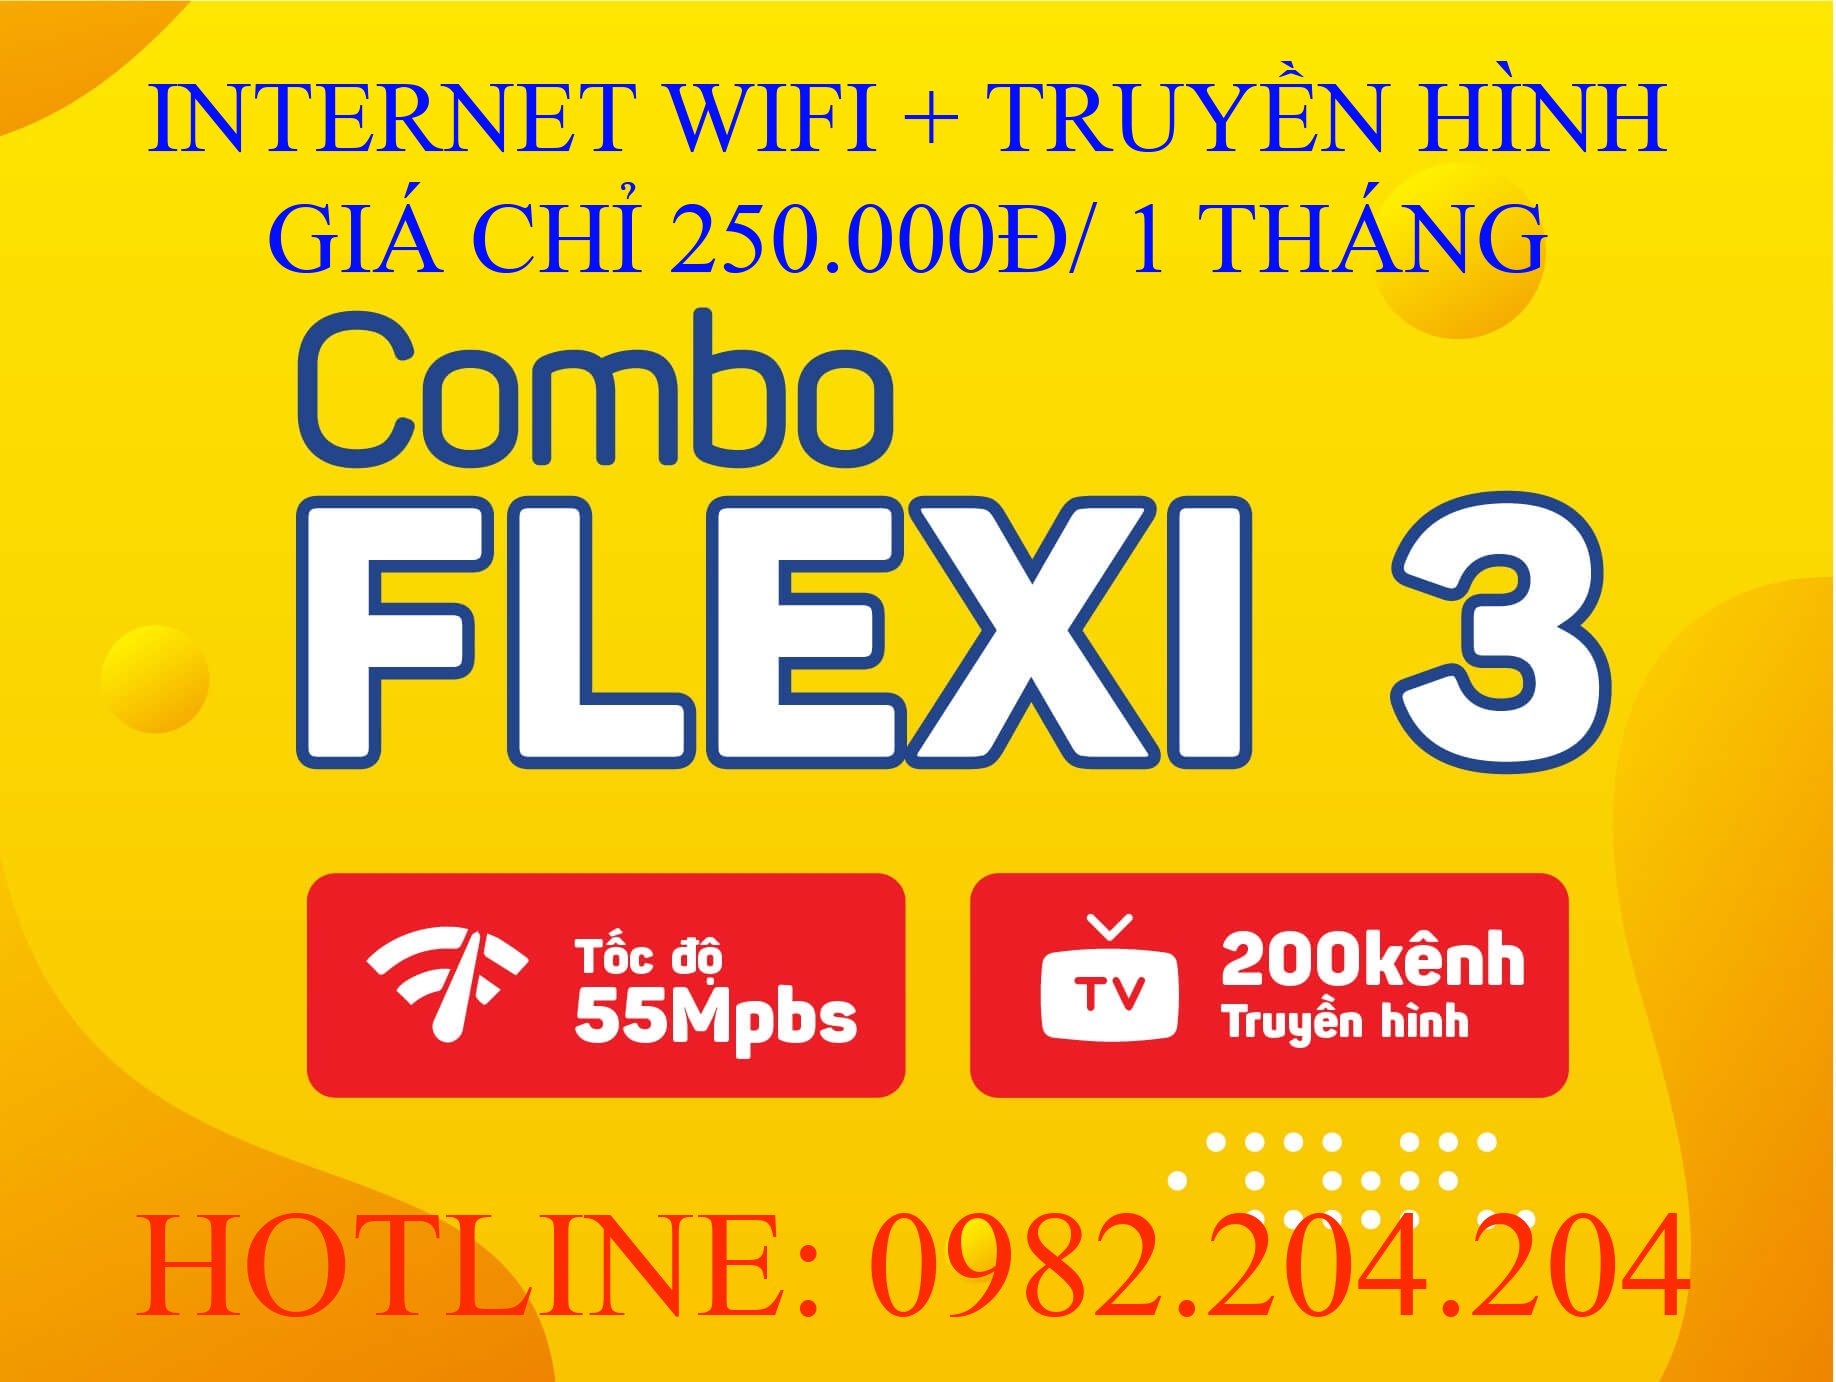 Lắp internet wifi Viettel và truyền hình Viettel combo flexi 3